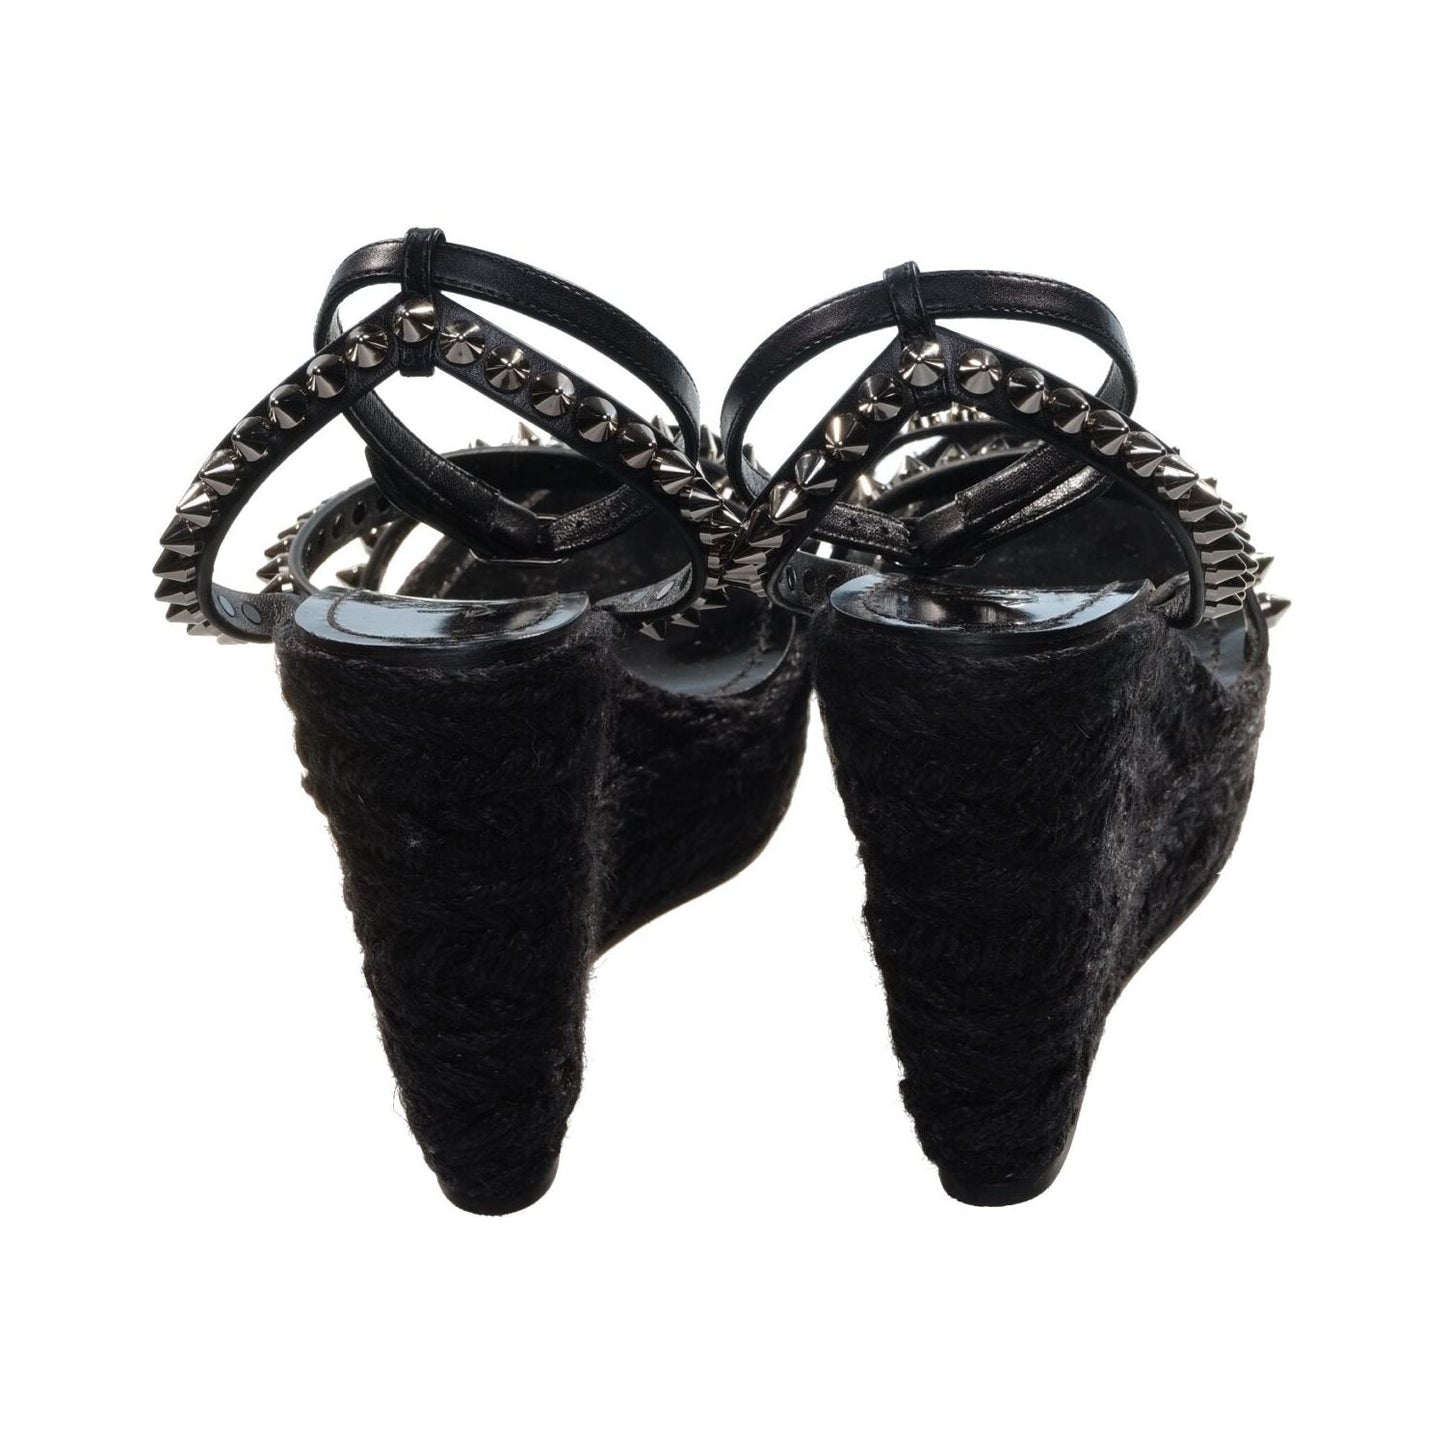 Malfadina Zeppa 120 Black Studded Sandal Wedges